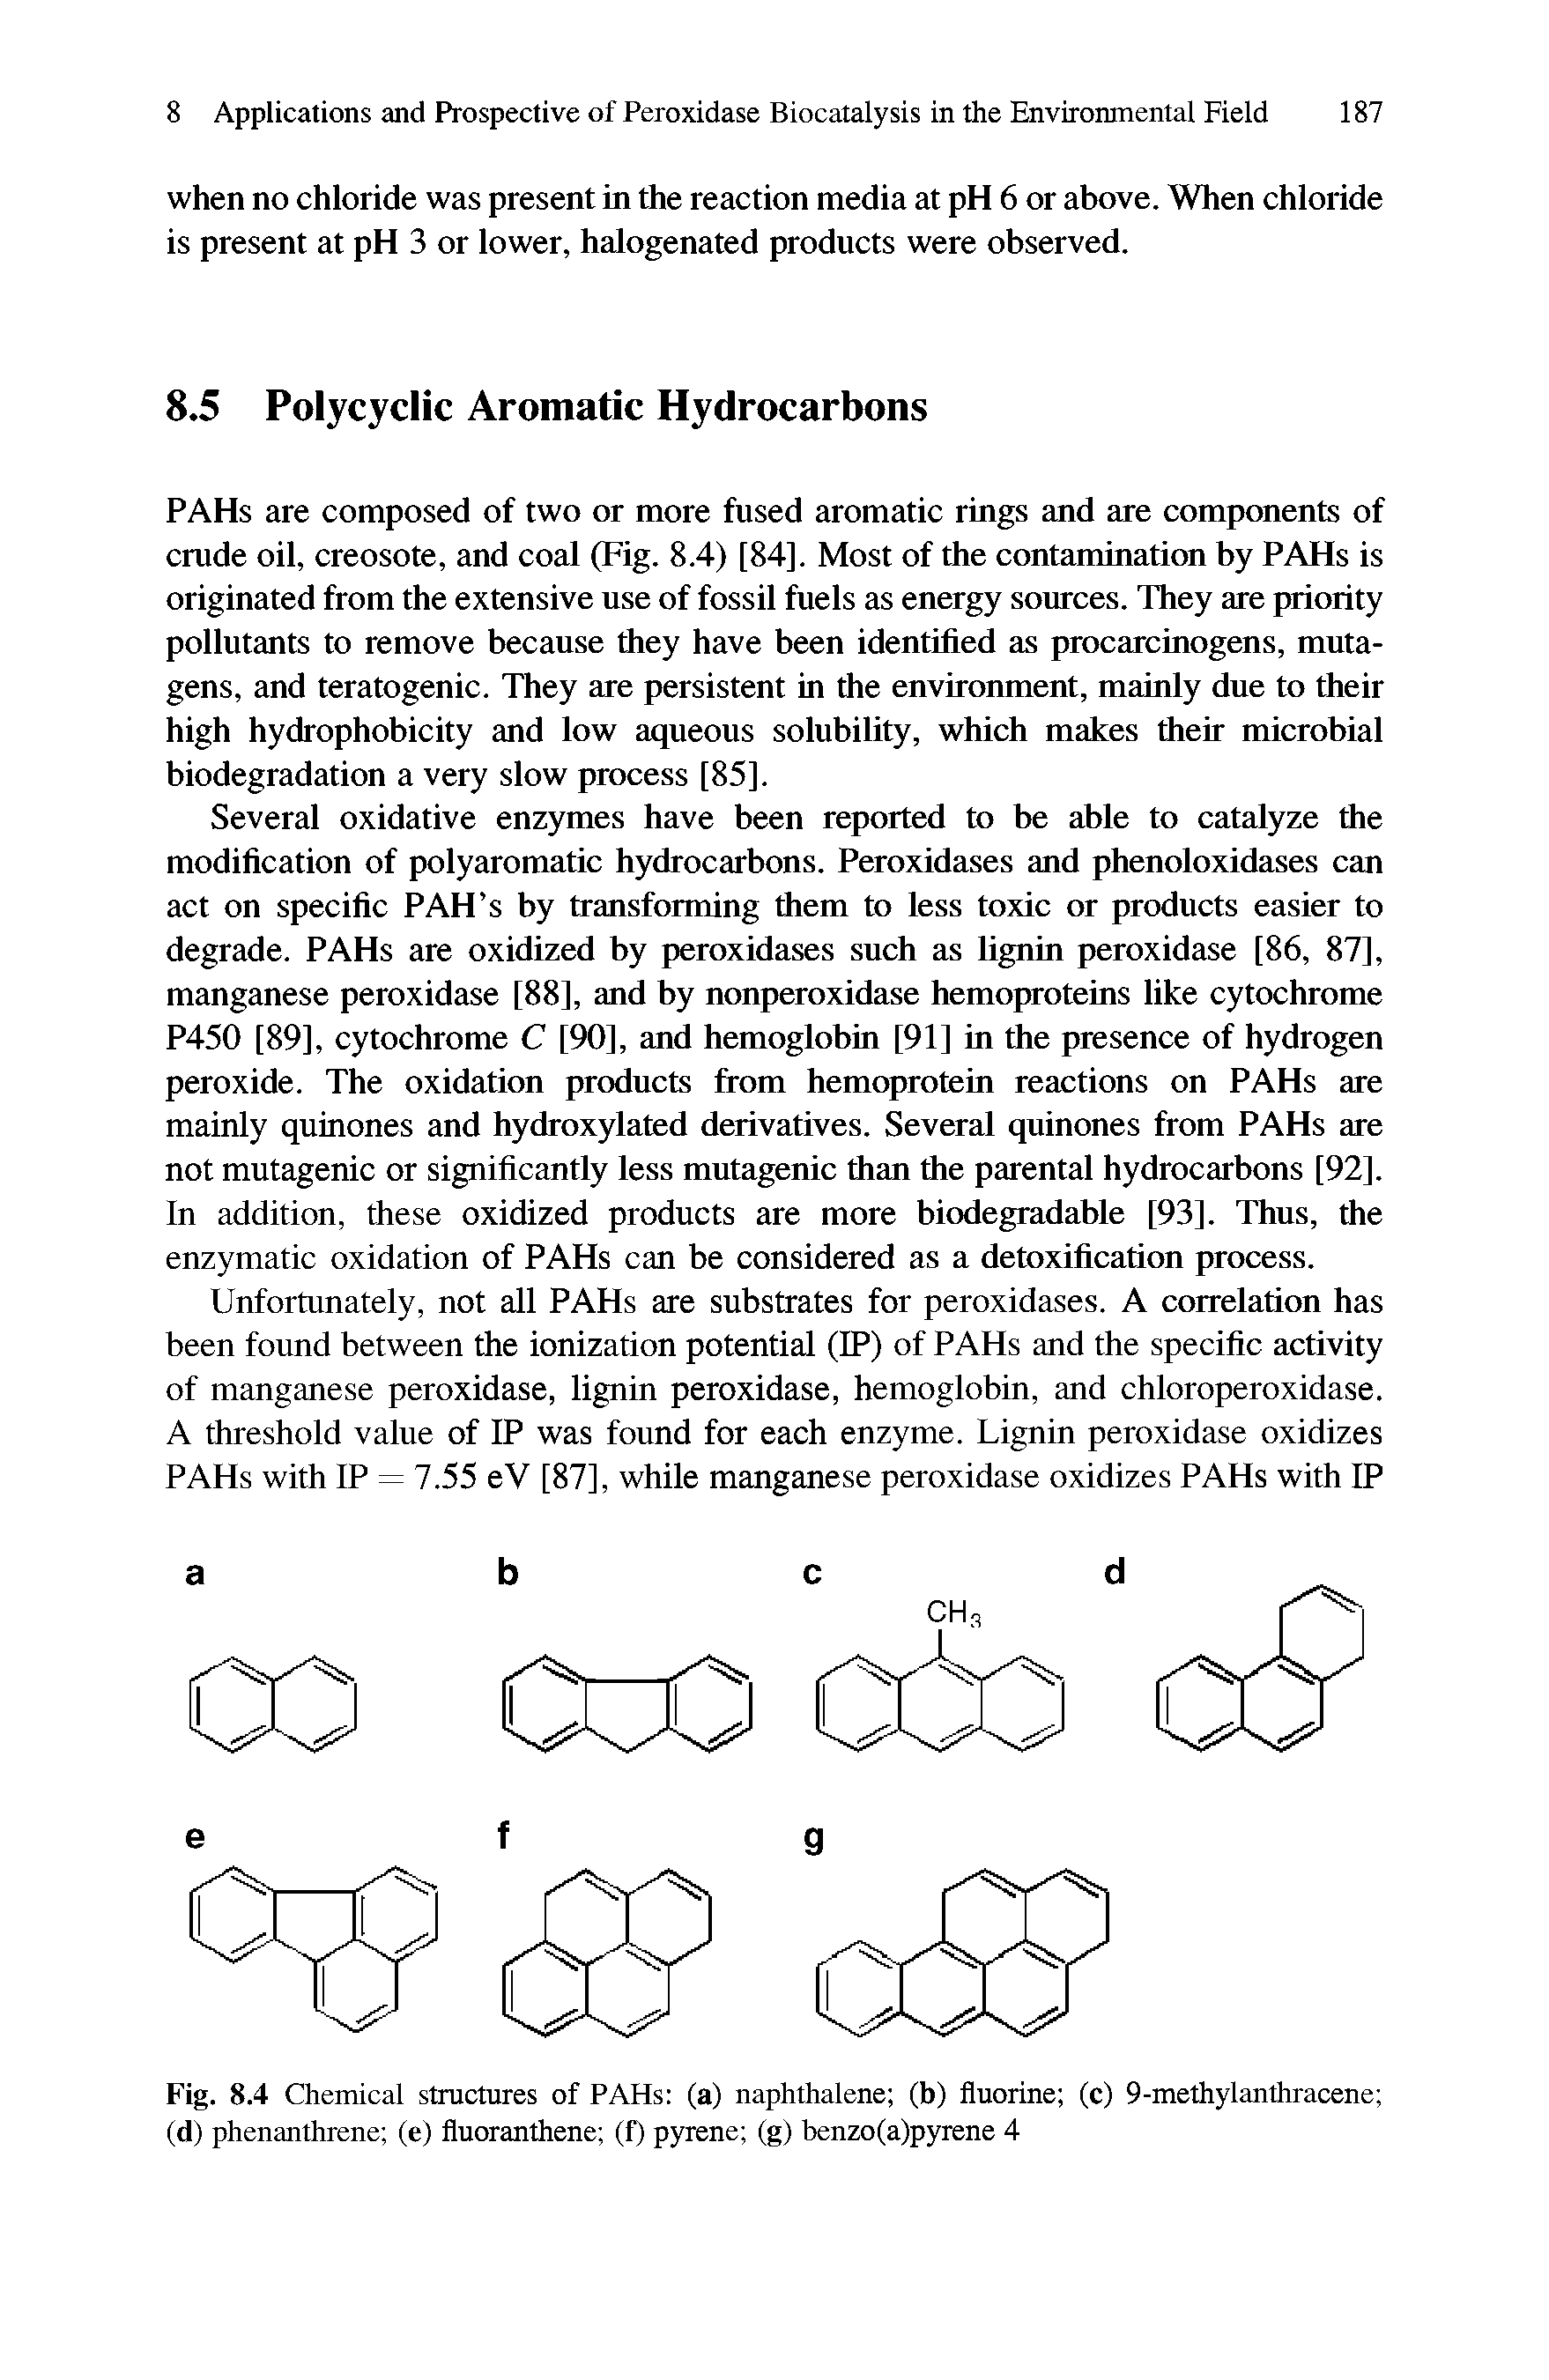 Fig. 8.4 Chemical structures of PAHs (a) naphthalene (b) fluorine (c) 9-methylanthracene (d) phenanthrene (e) fluoranthene (f) pyrene (g) benzo(a)pyrene 4...